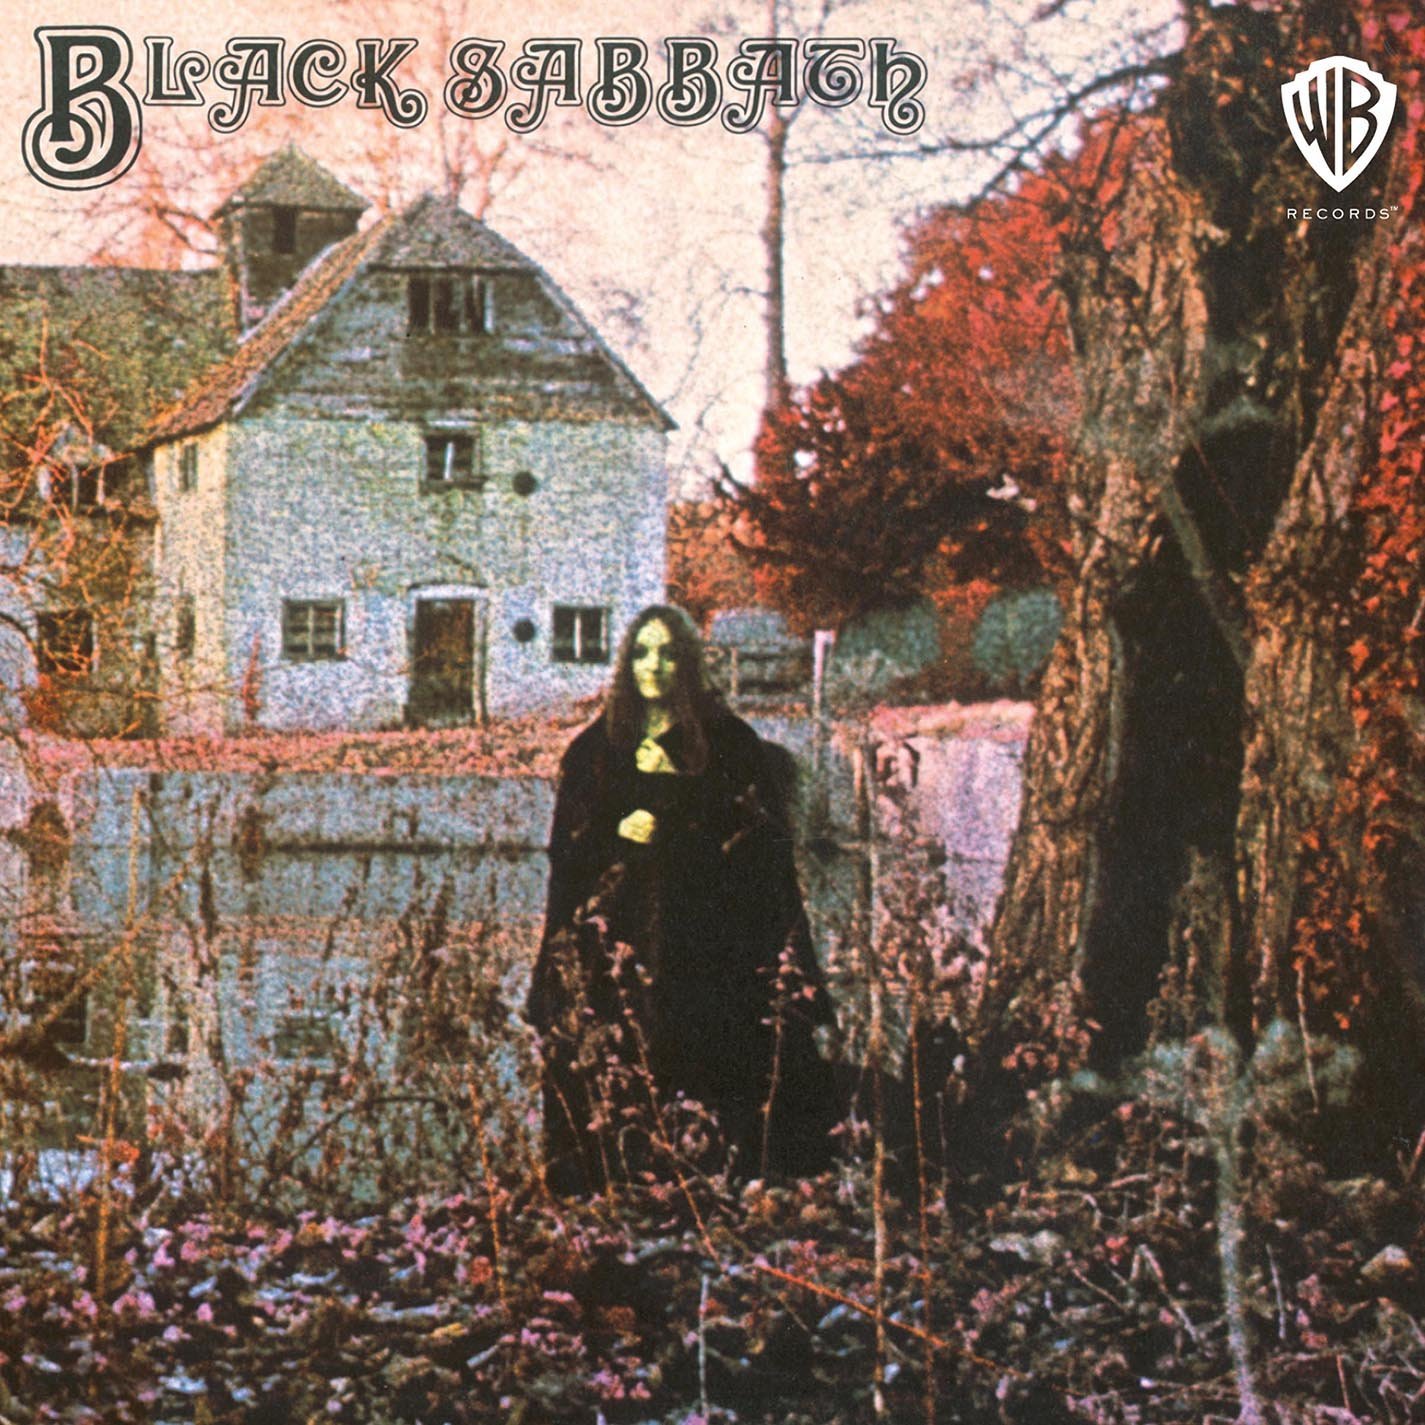 The Story Behind Black Sabbath's Eerie Debut Album Art